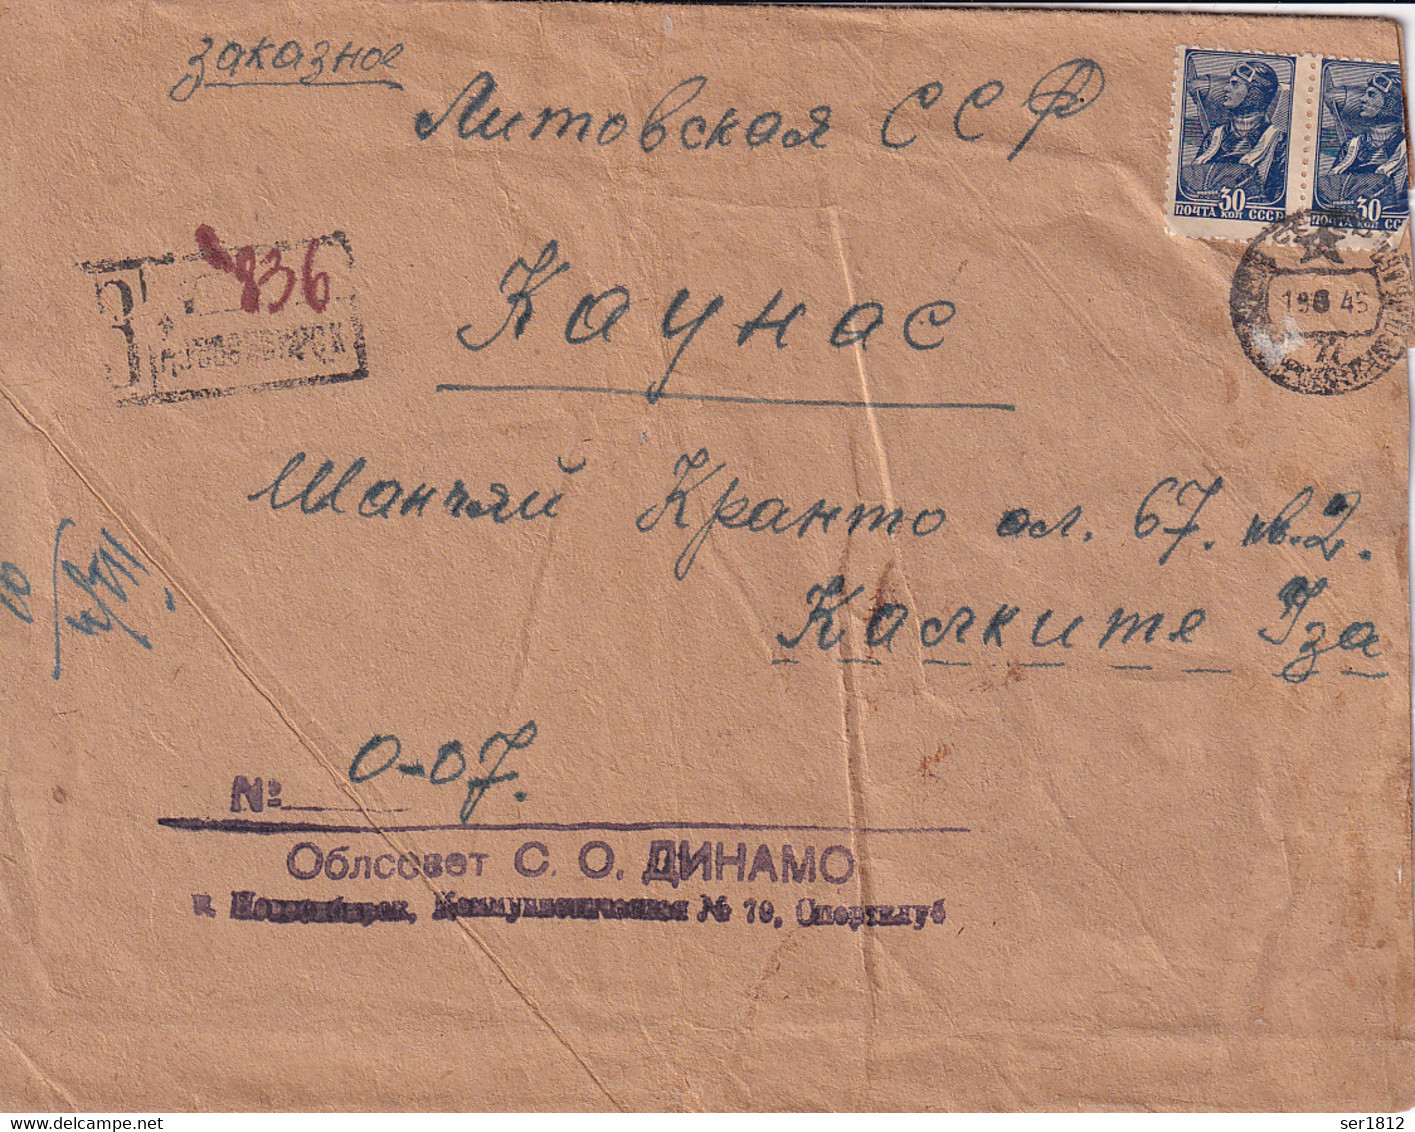 Russia Ussr 1945 Cover And Letter  From Gulag Novosibirsk To Kaunas Lithuania - Briefe U. Dokumente